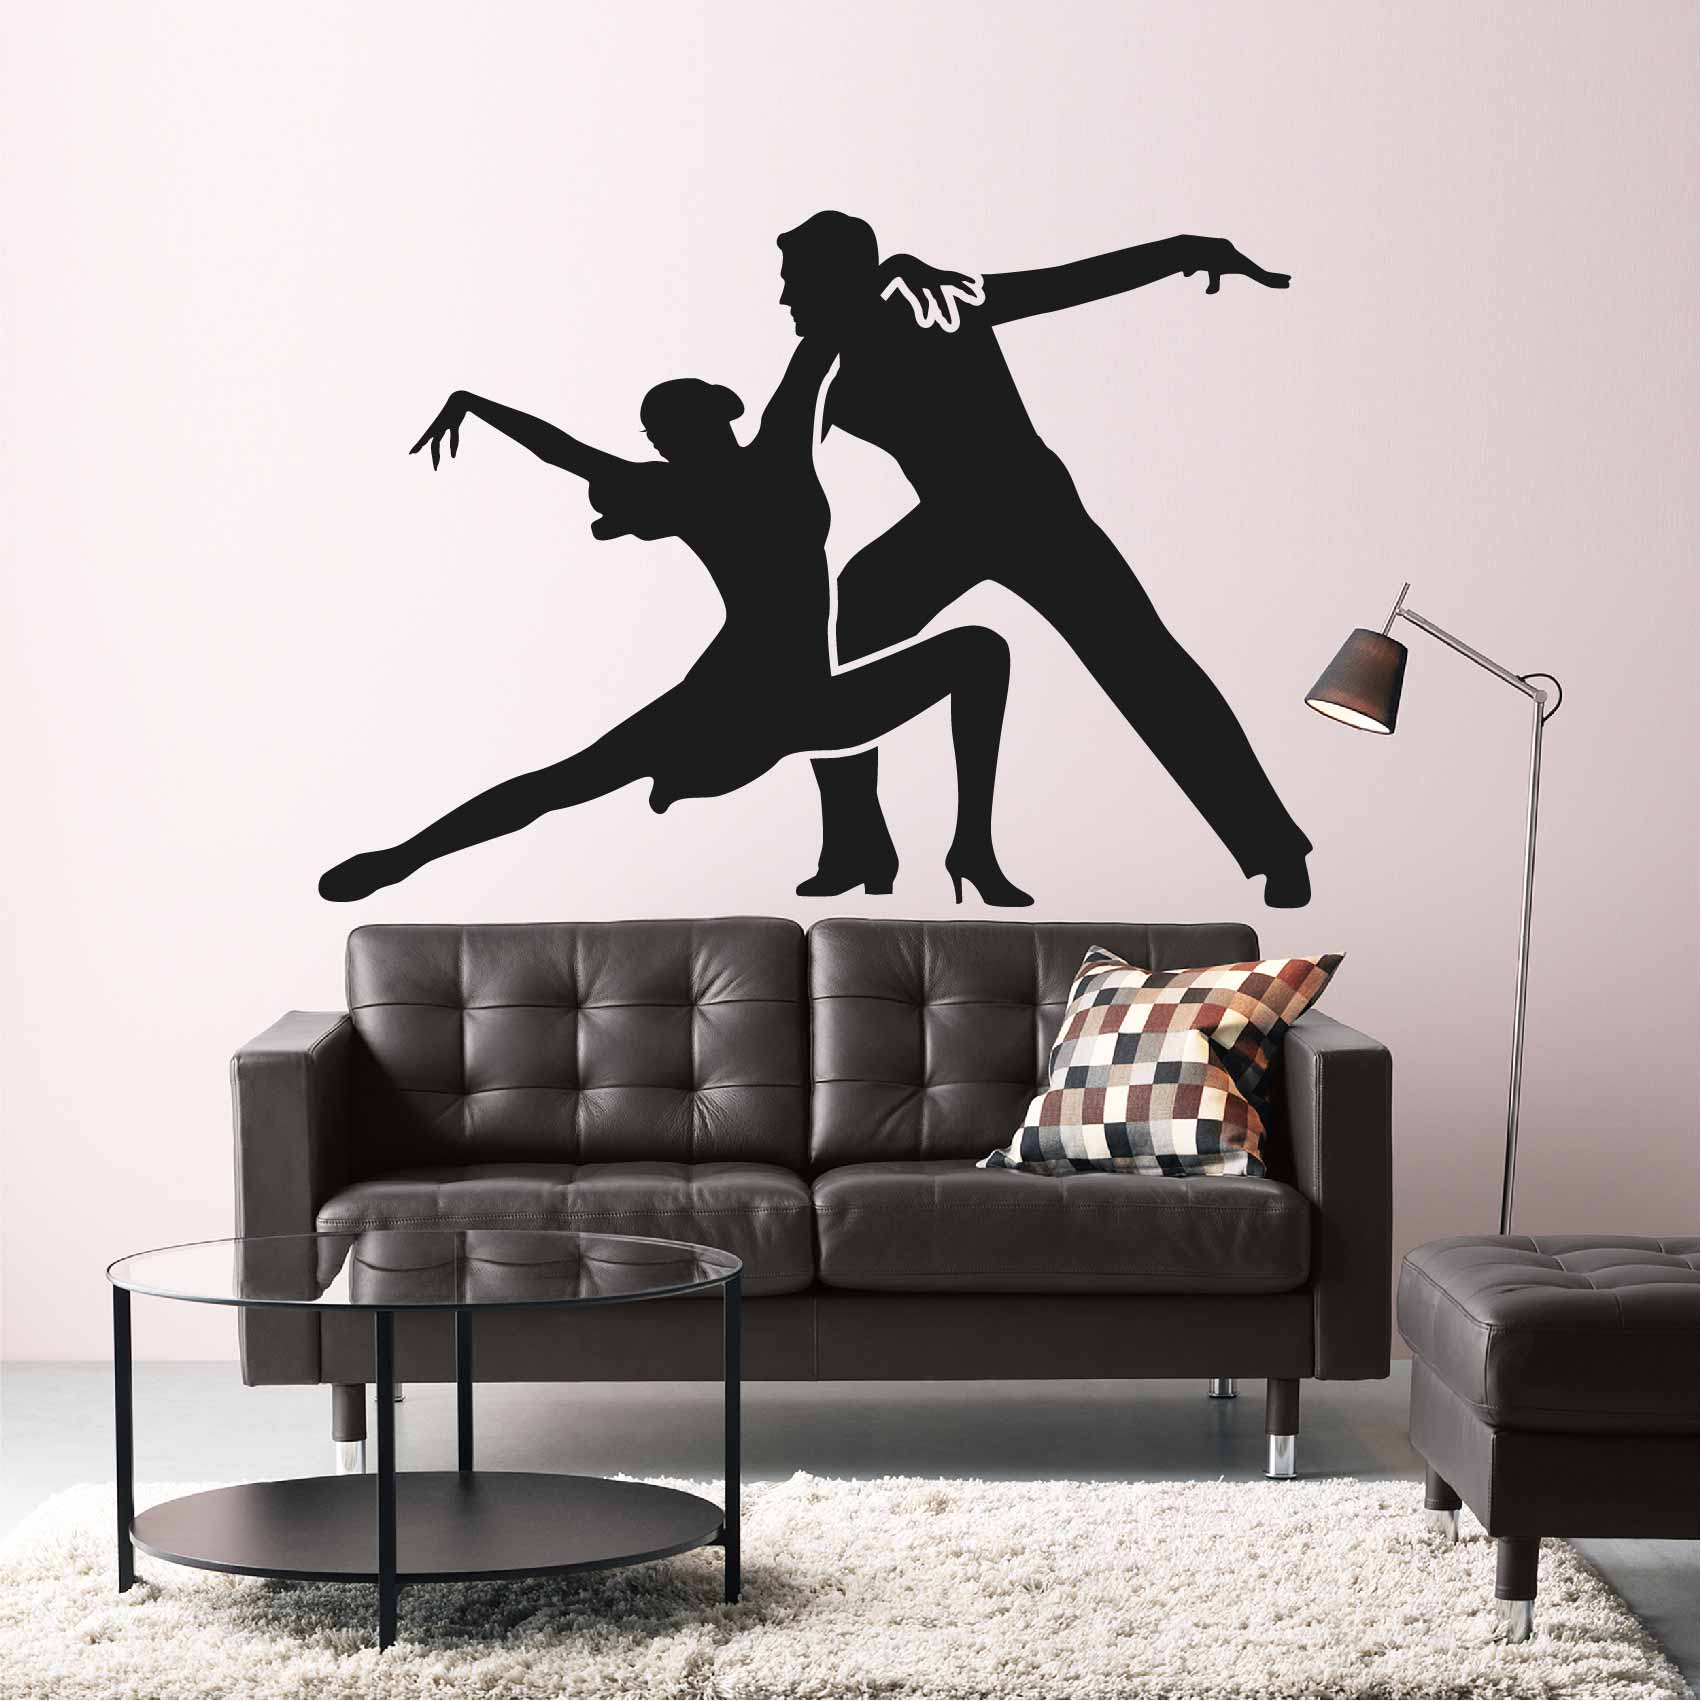 stickers-danse-tango-ref36sport-stickers-muraux-danse-autocollant-danseuse-deco-chambre-fille-salon-sticker-mural-sport